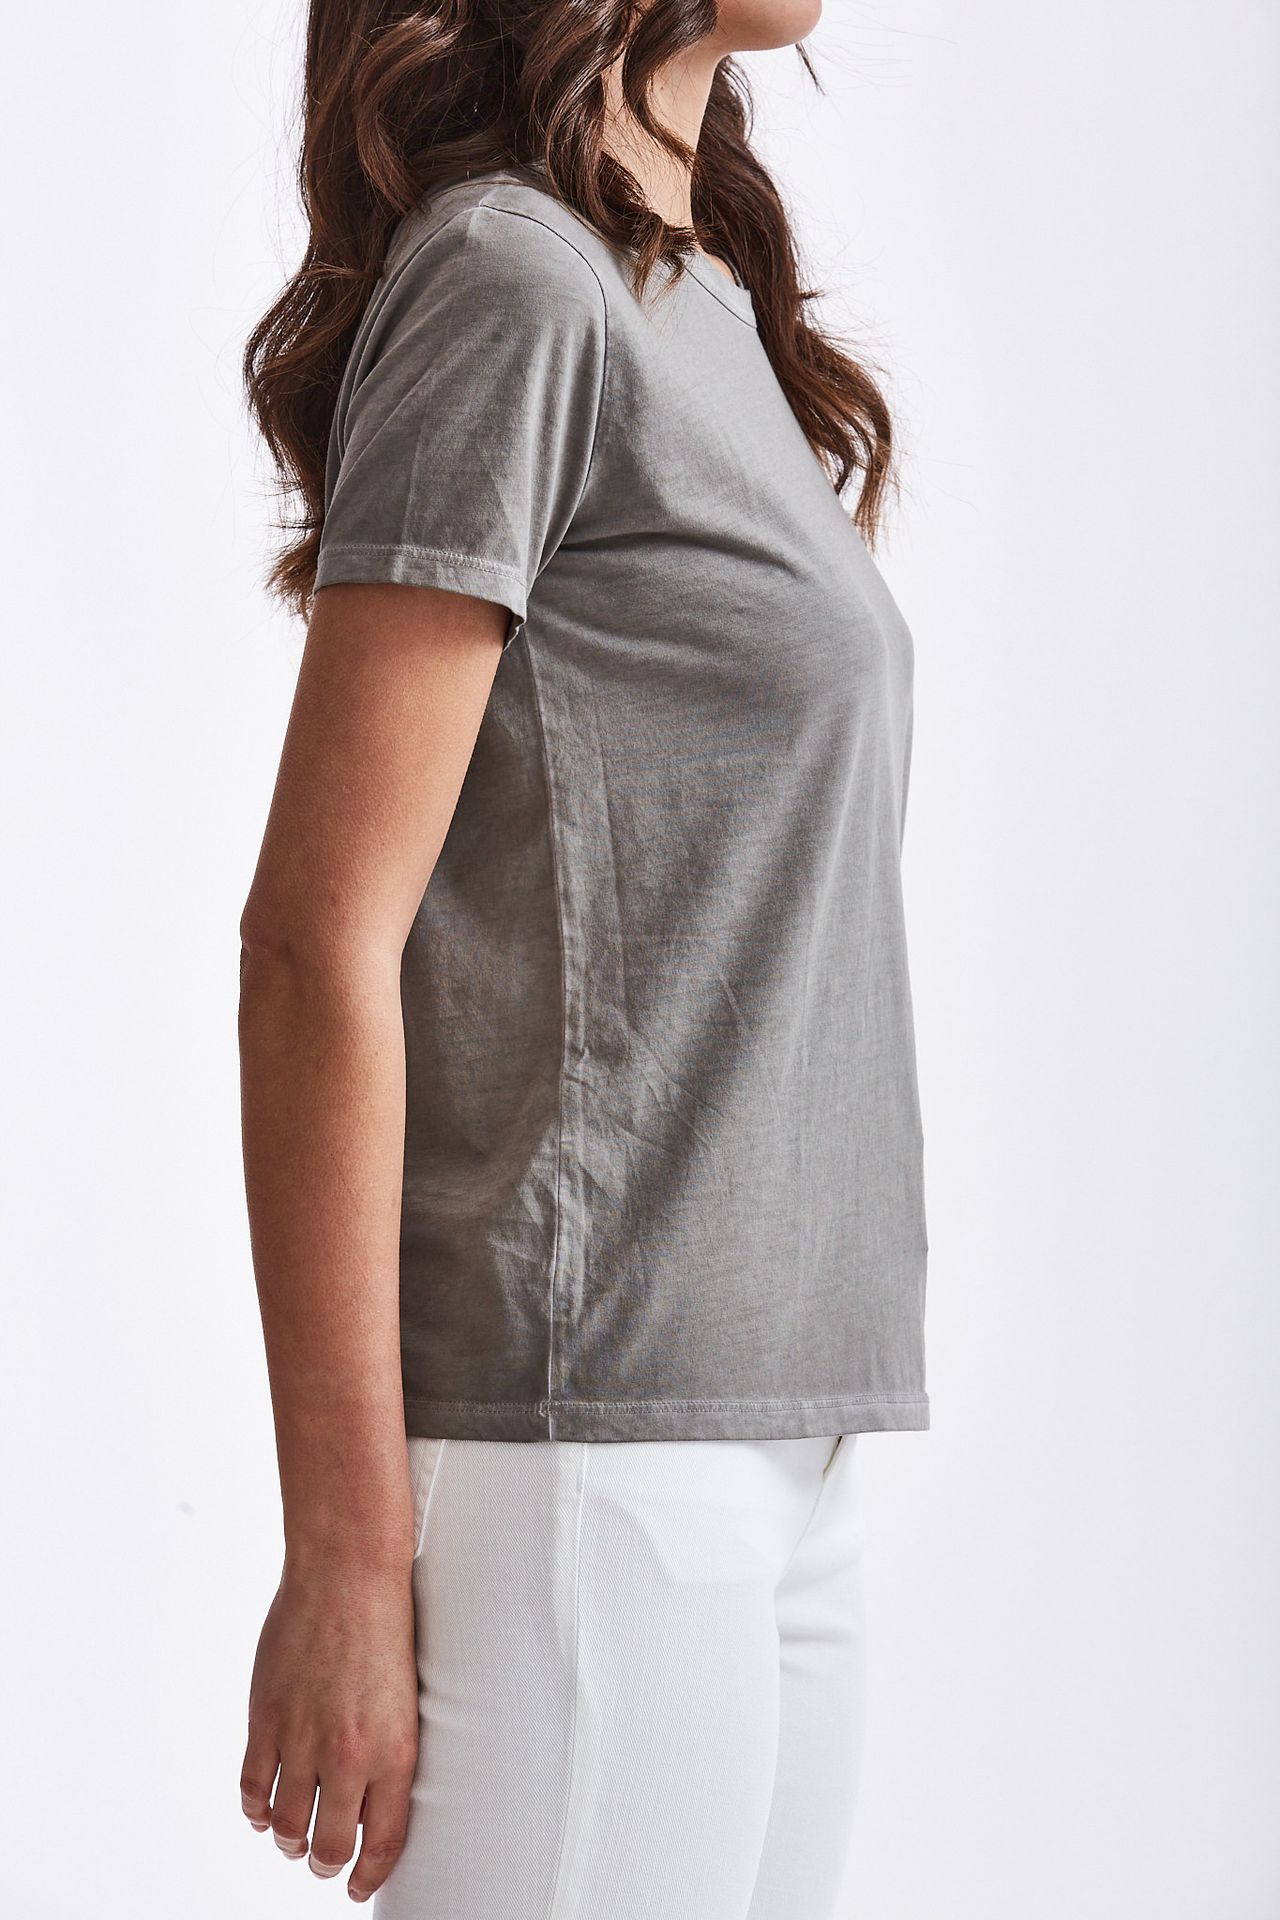 T-shirt MARIBEL WASHED in cotone grigio